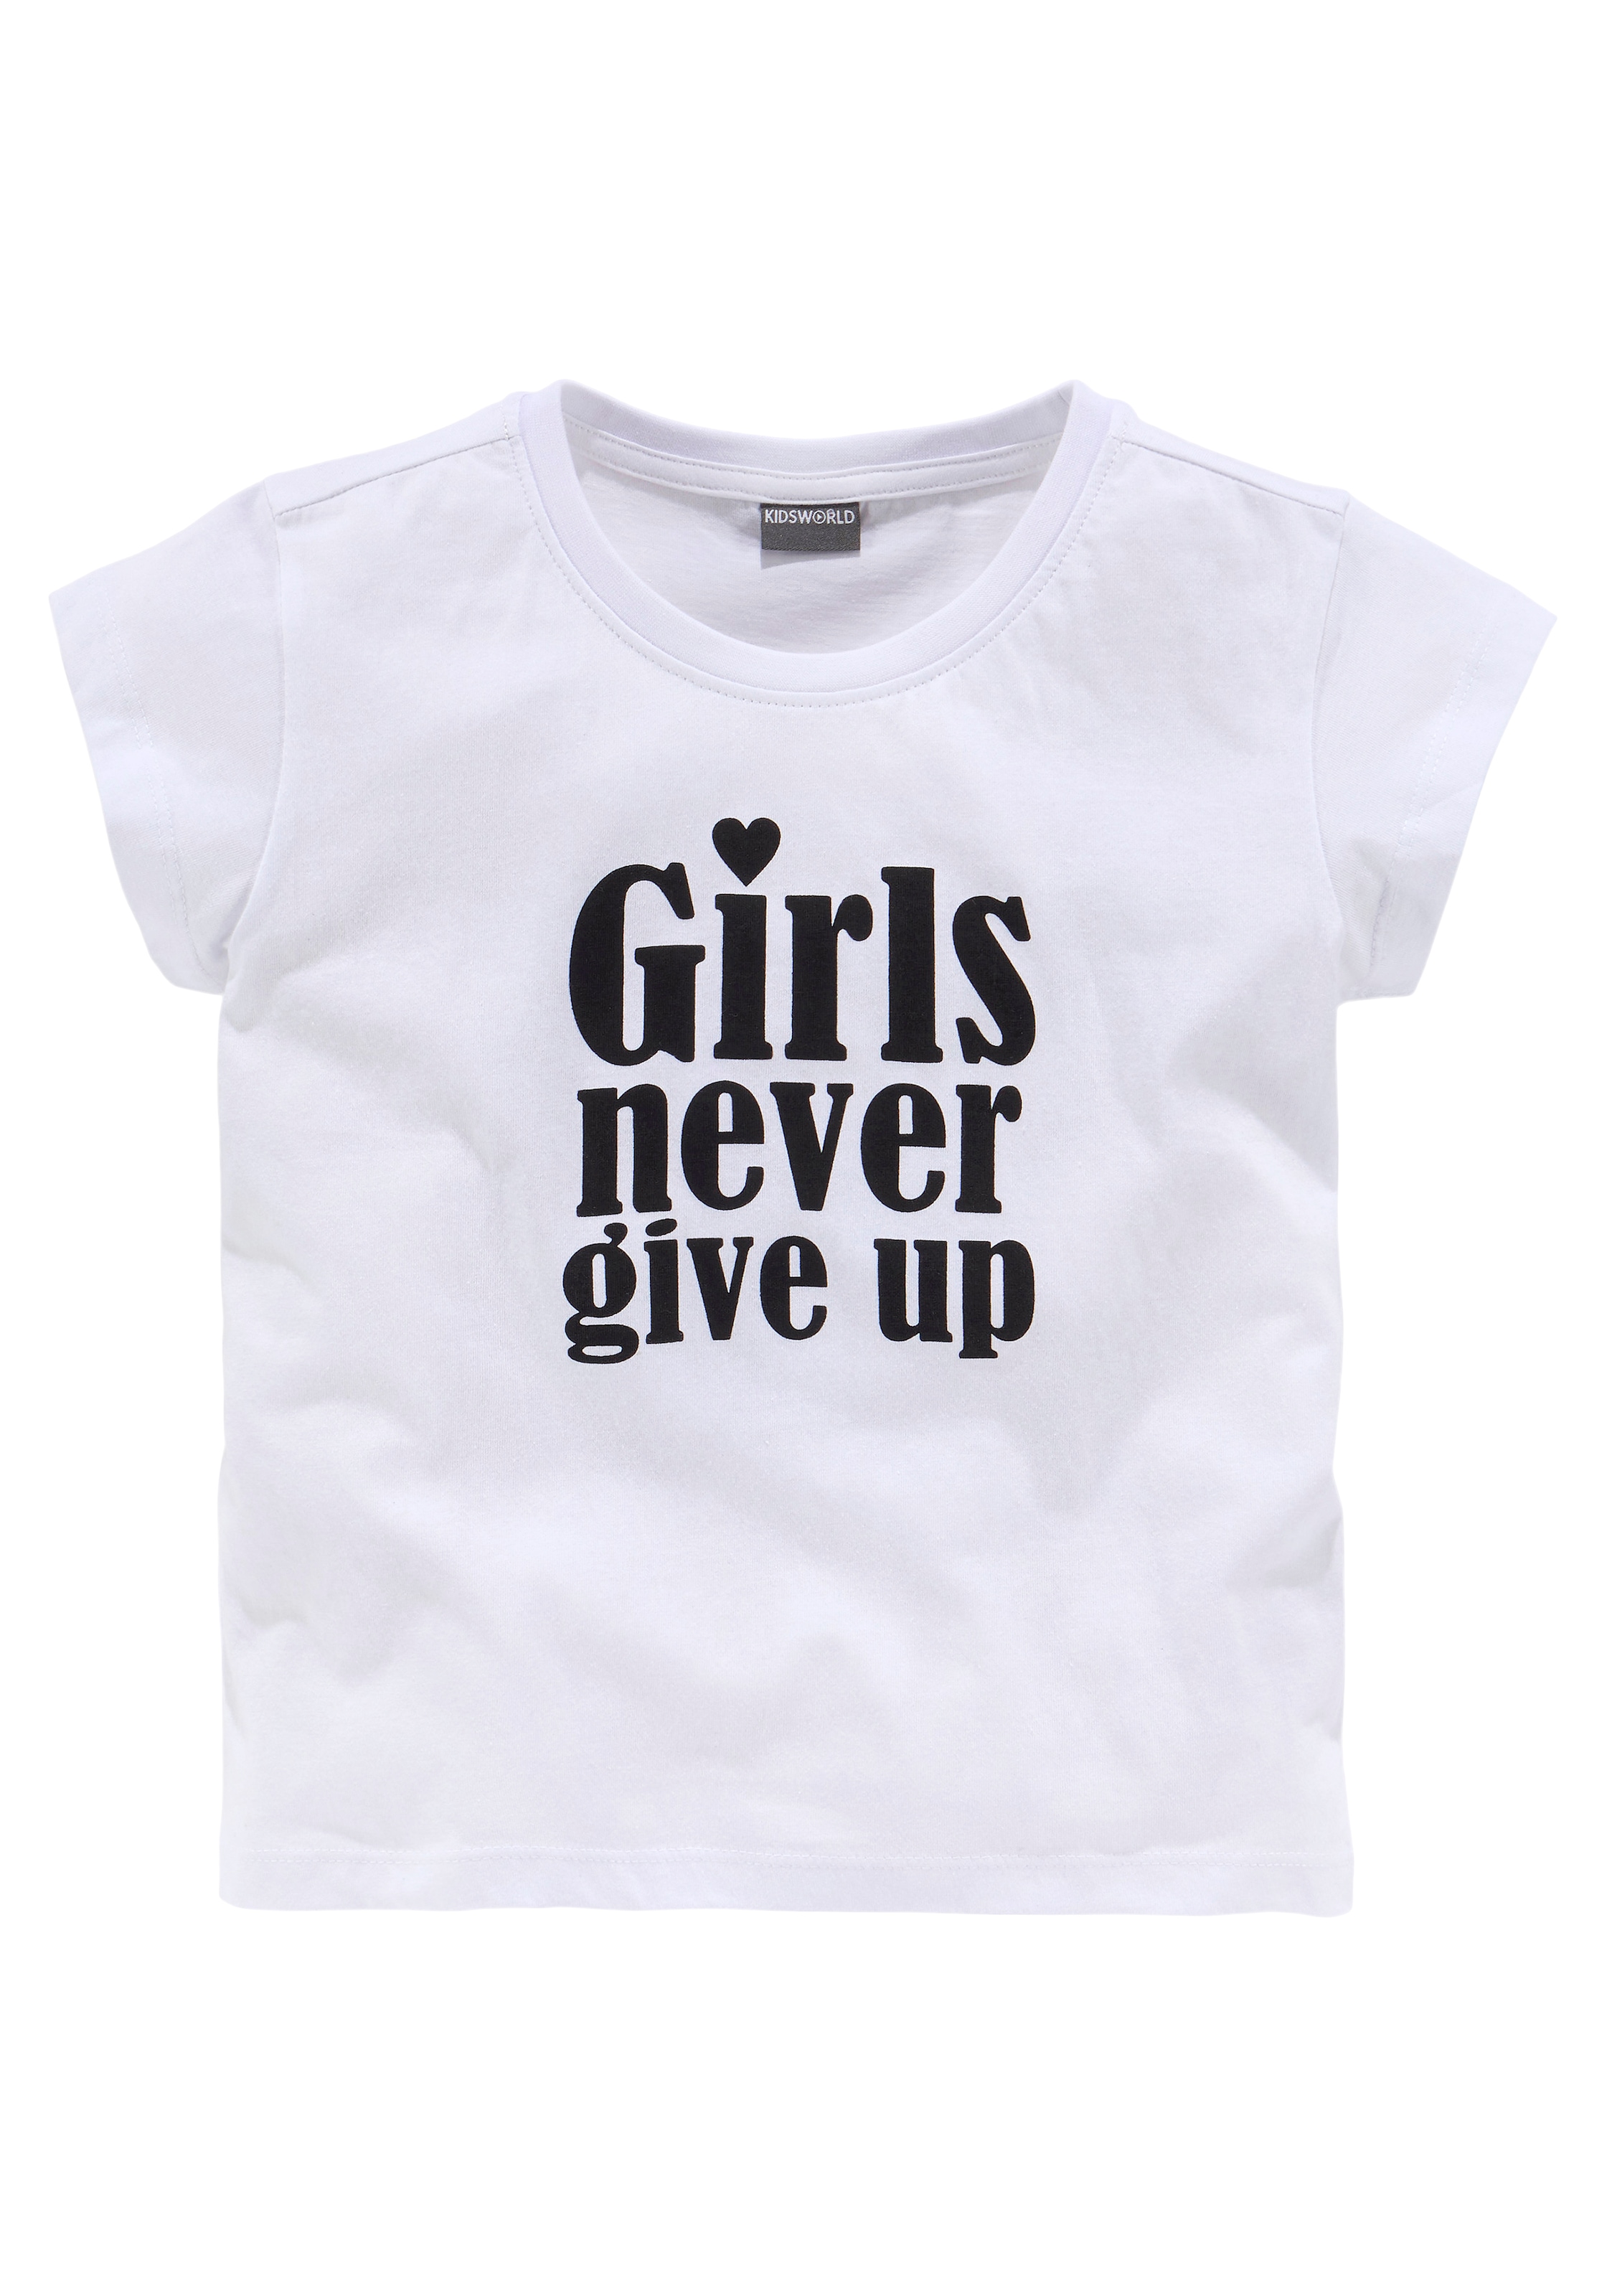 up«, KIDSWORLD nerver jetzt kurze T-Shirt »Girls %Sale give im Form modische